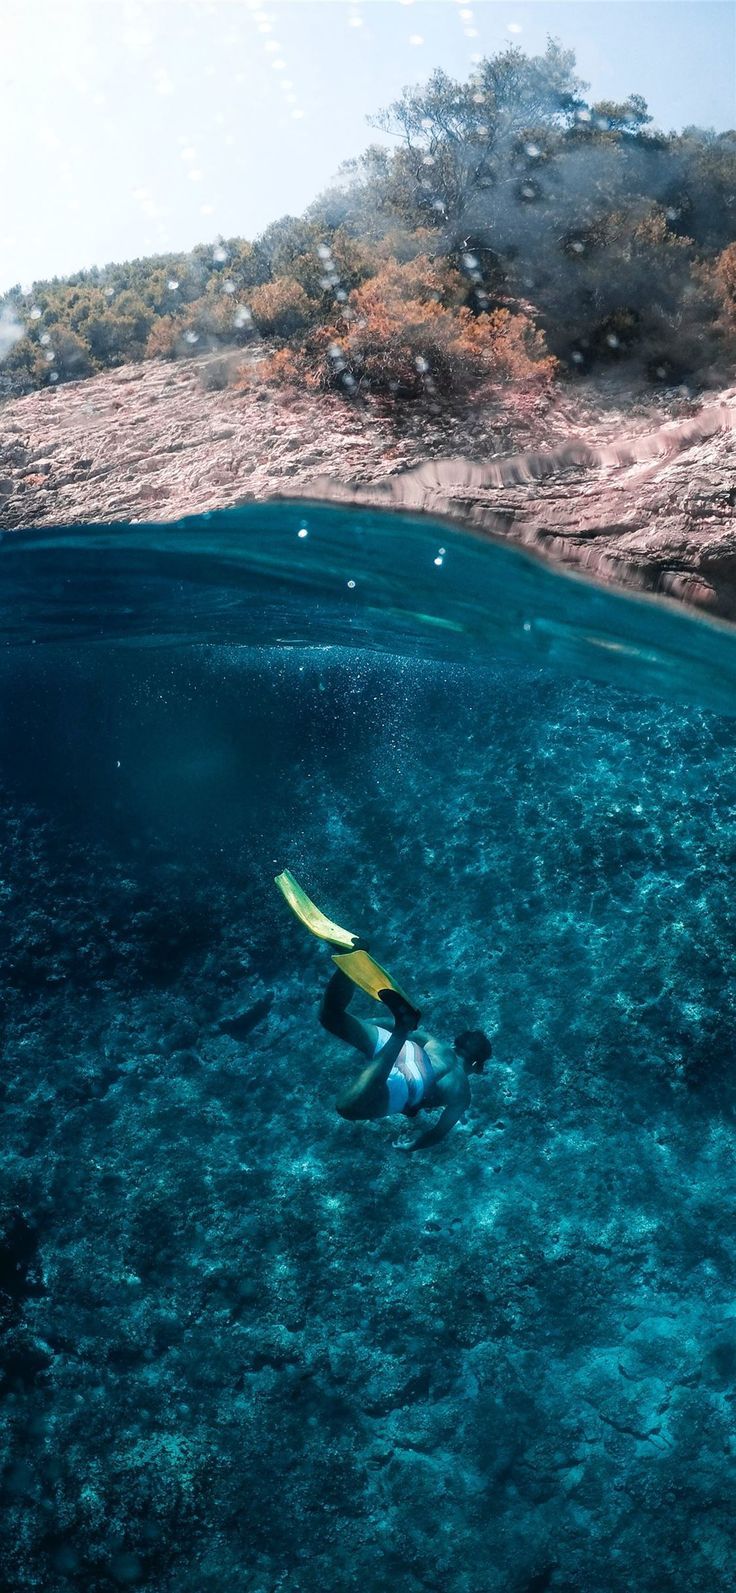  Tauchen Hintergrundbild 736x1593. person diving on body of water #hvar #croatia #iPhone11Wallpaper. Travel around the world, Diving, Croatia